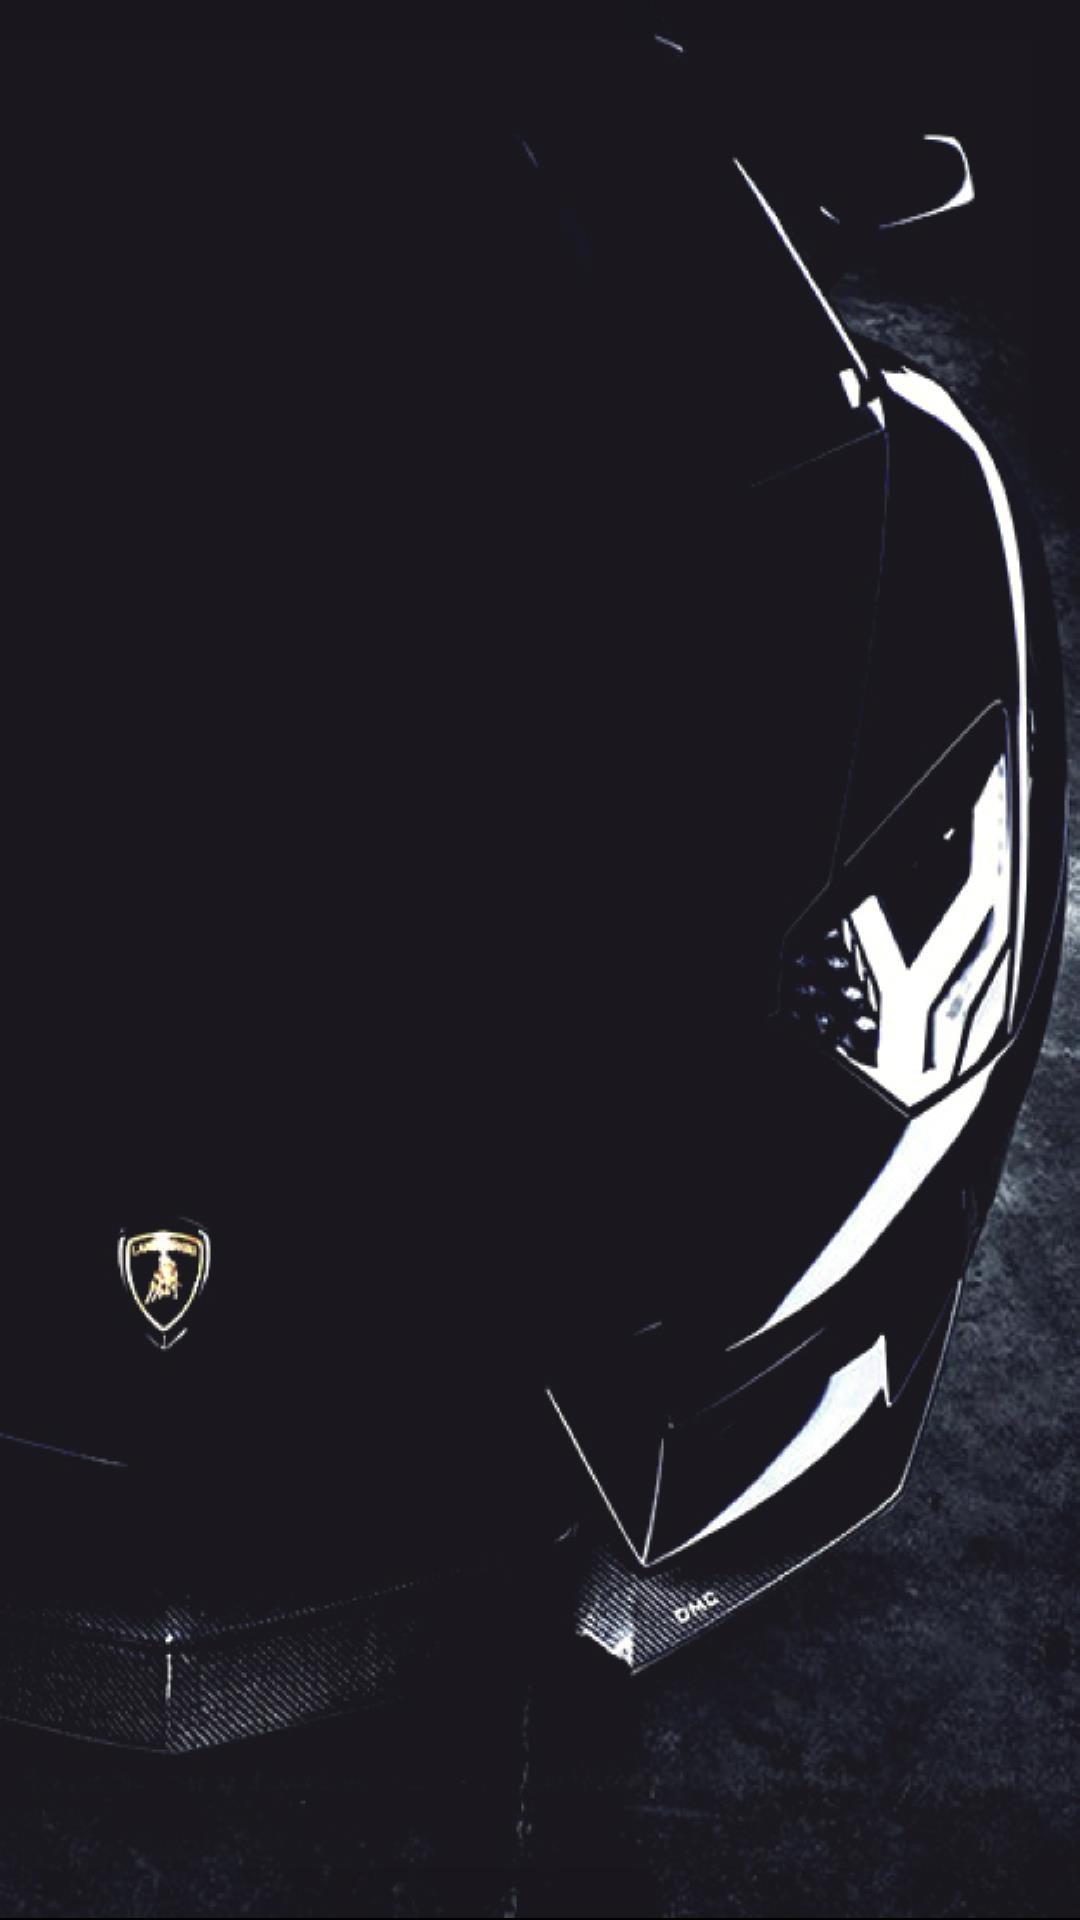 Lamborghini Logo Black Background Android Wallpaper